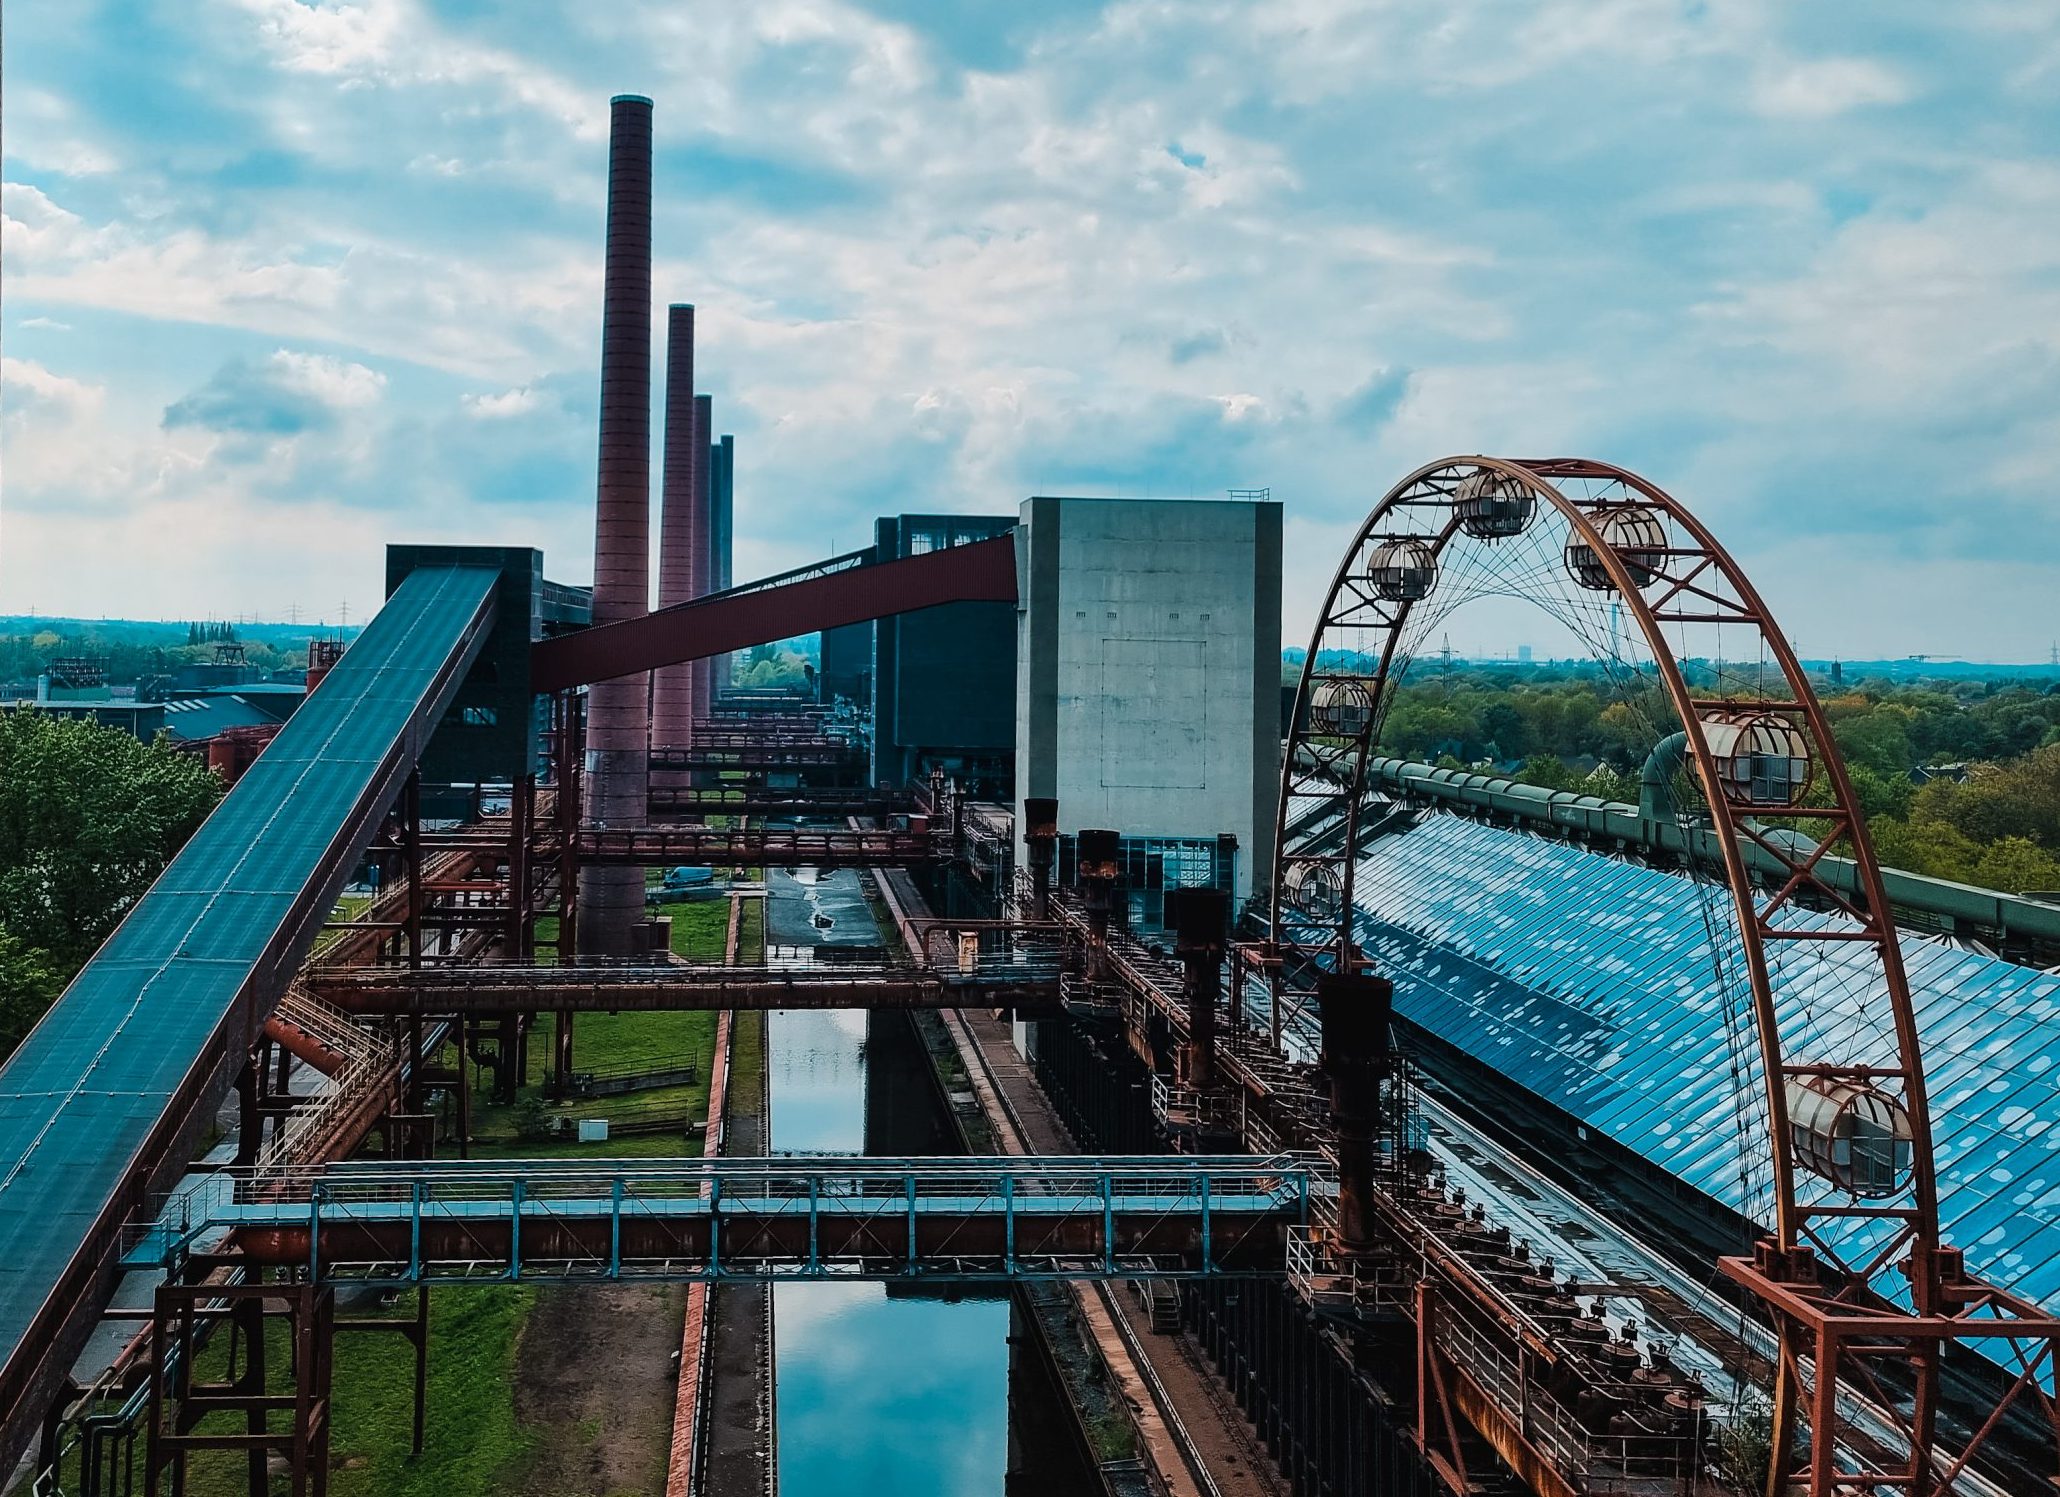 Zeche Zollverein and the mammoths of the Ruhr region